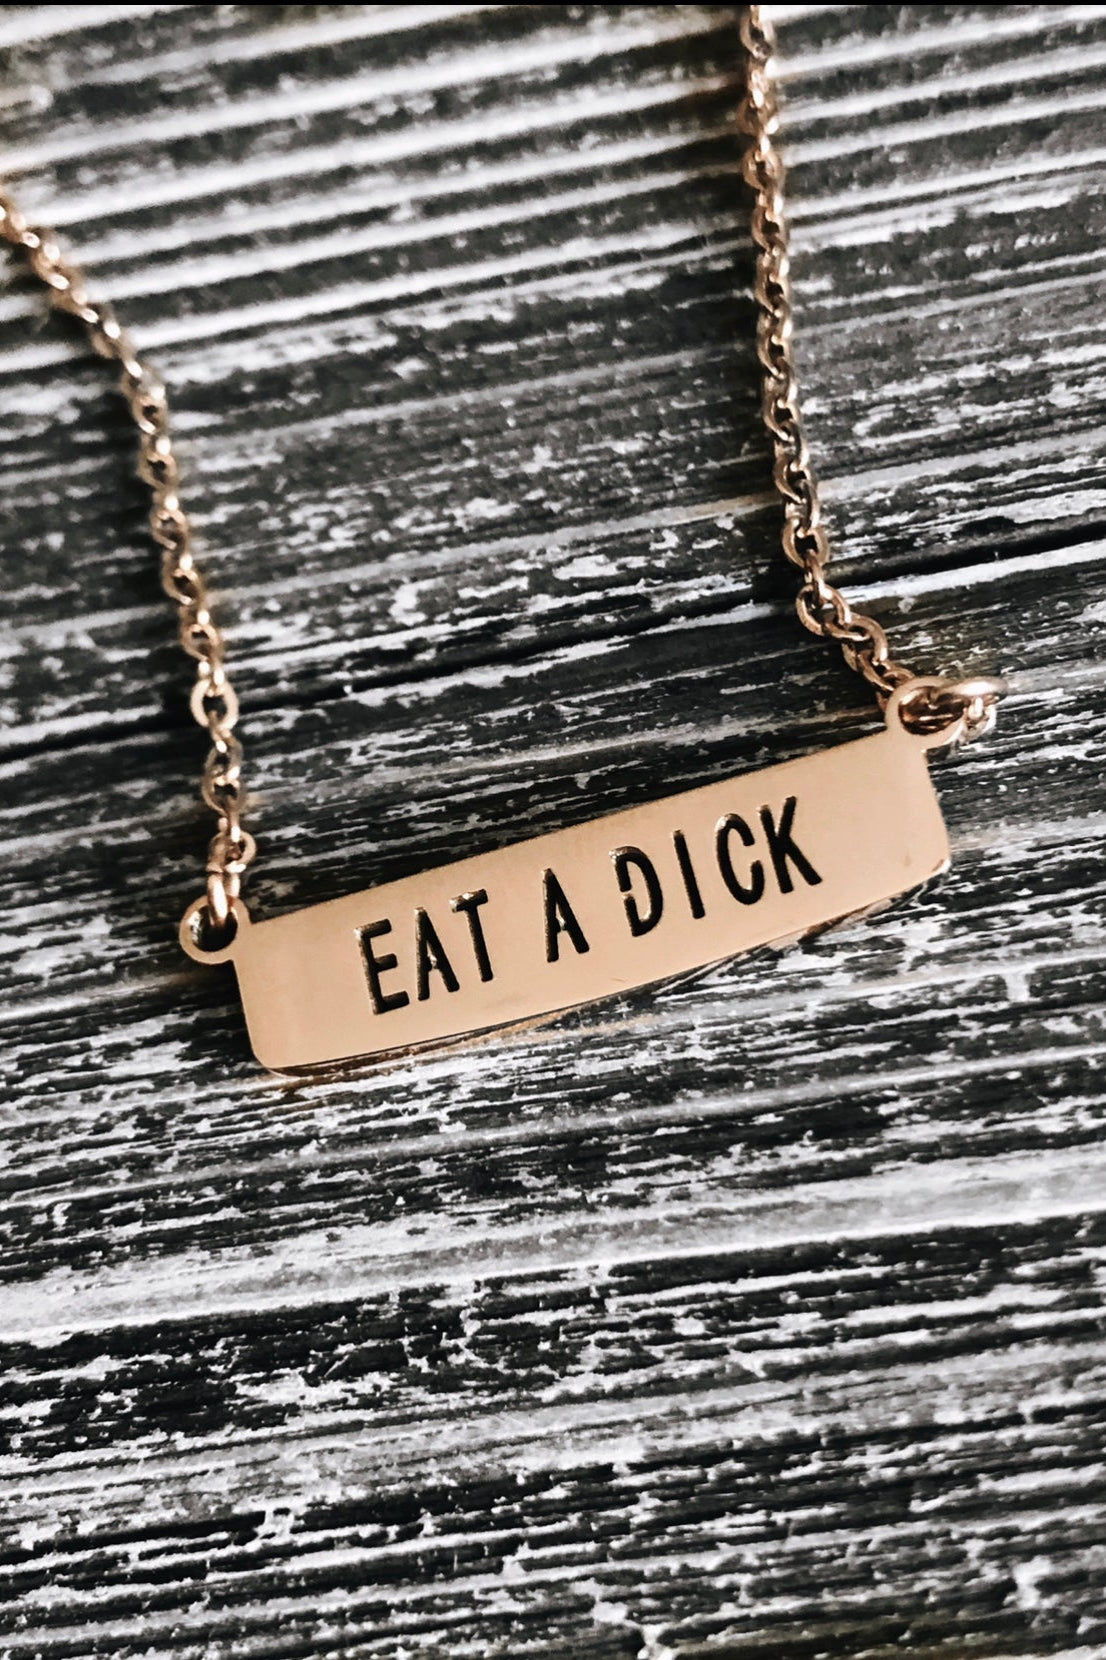 Eat A Dick Necklace - UntamedEgo LLC.